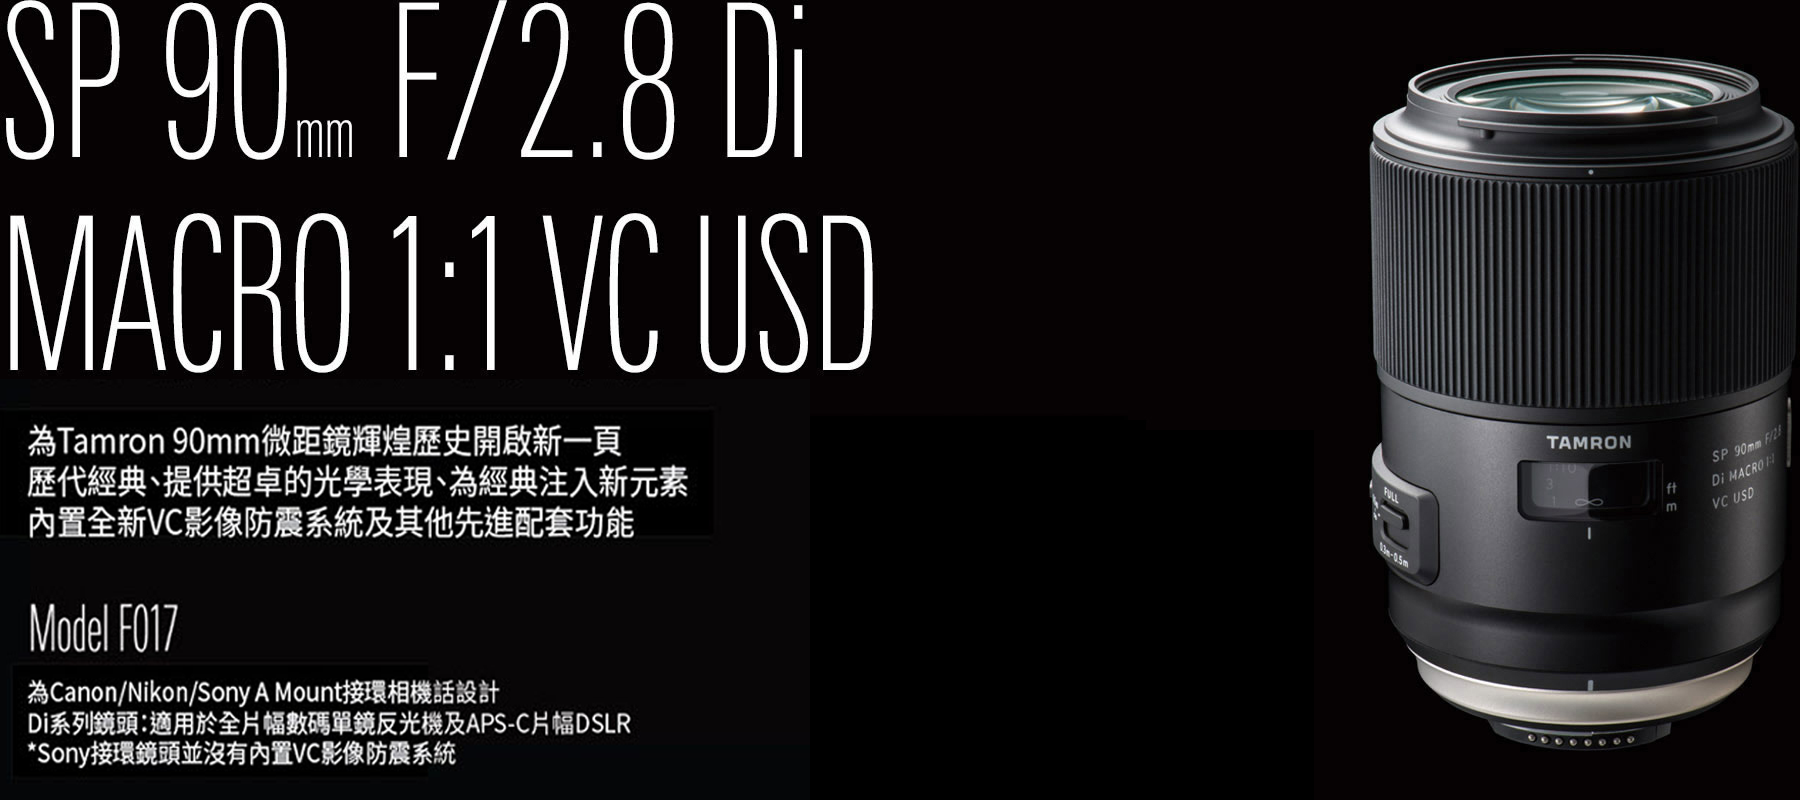 SP 90mm F/2.8 Di MACRO 1:1 VC USD (Model F017) | TAMRON HK | 騰龍香港